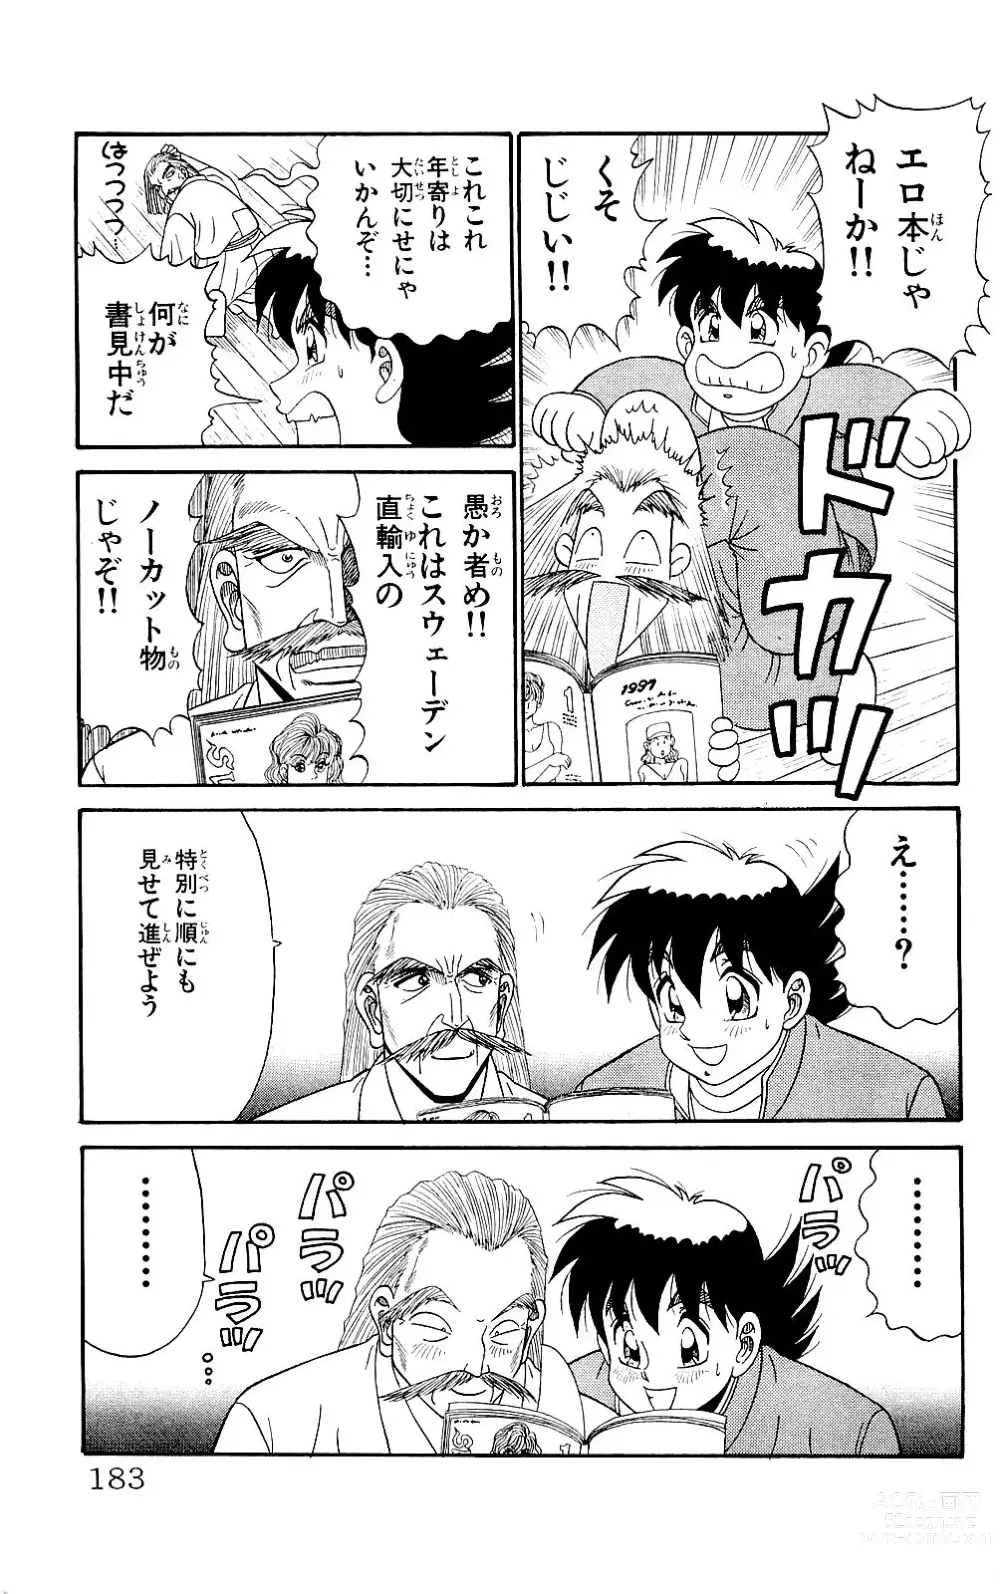 Page 181 of manga Orette Piyoritan 06